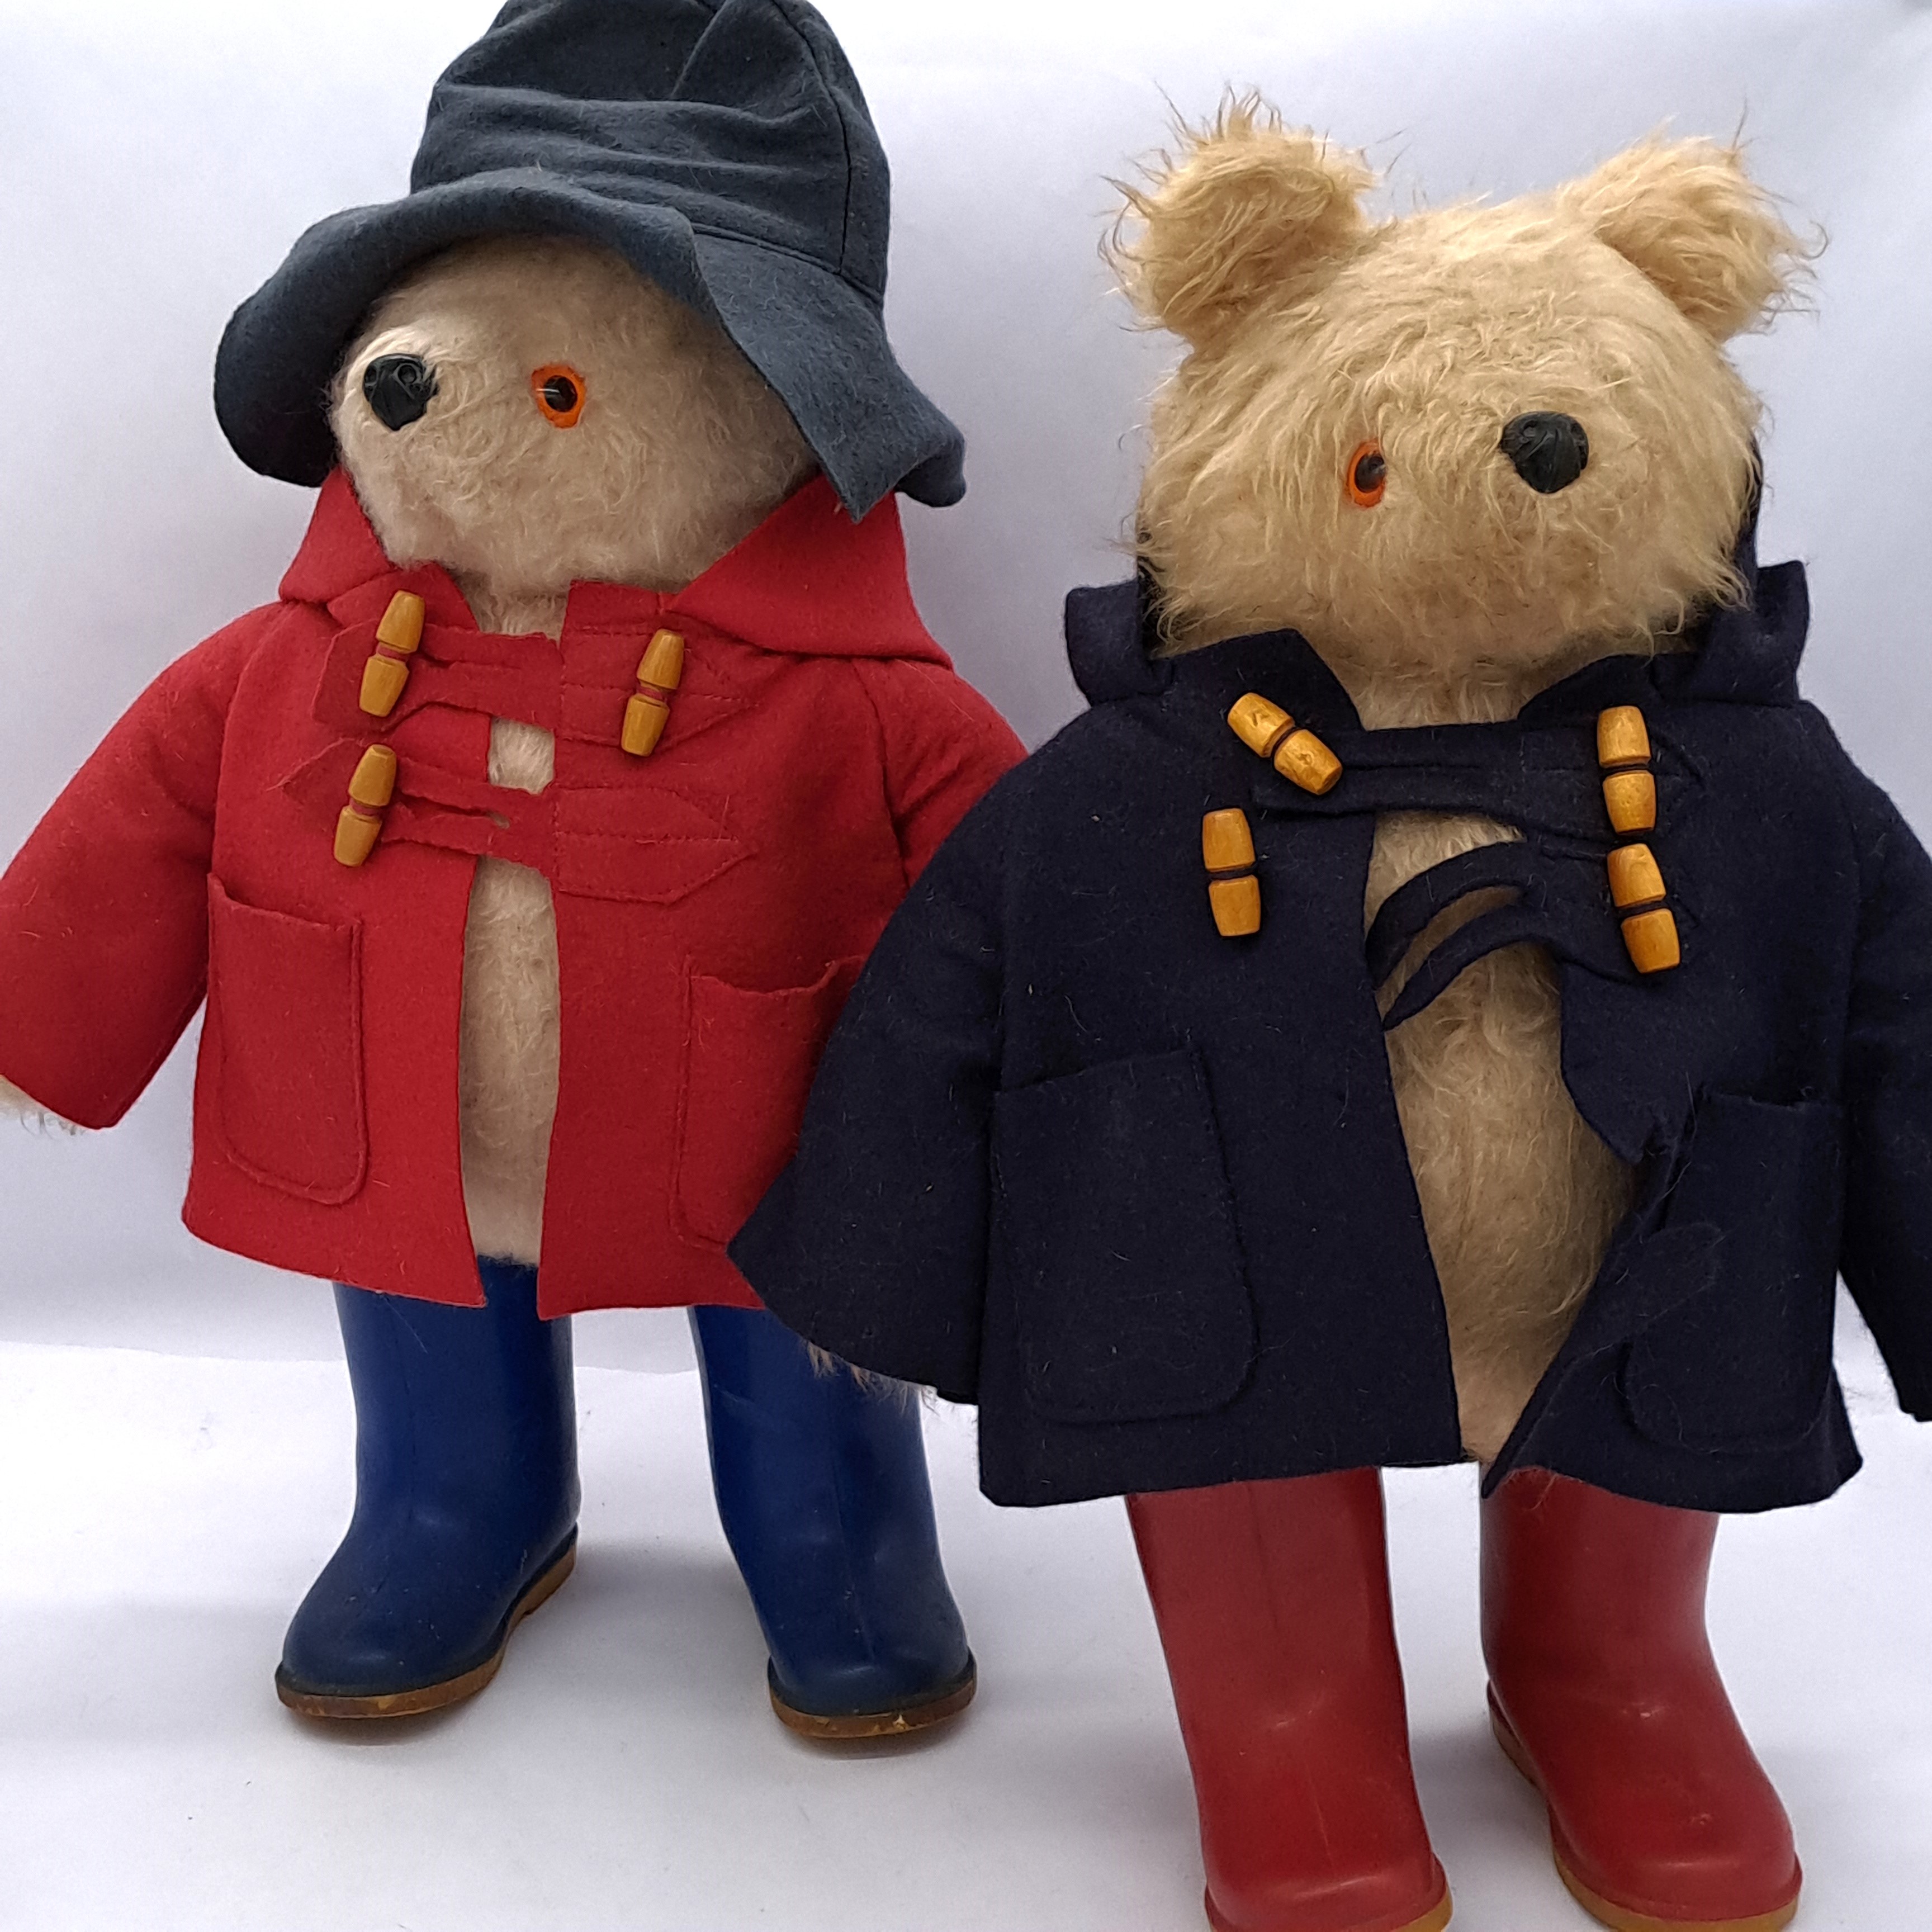 Gabrielle Designs pair of vintage Paddington Bear teddy bears